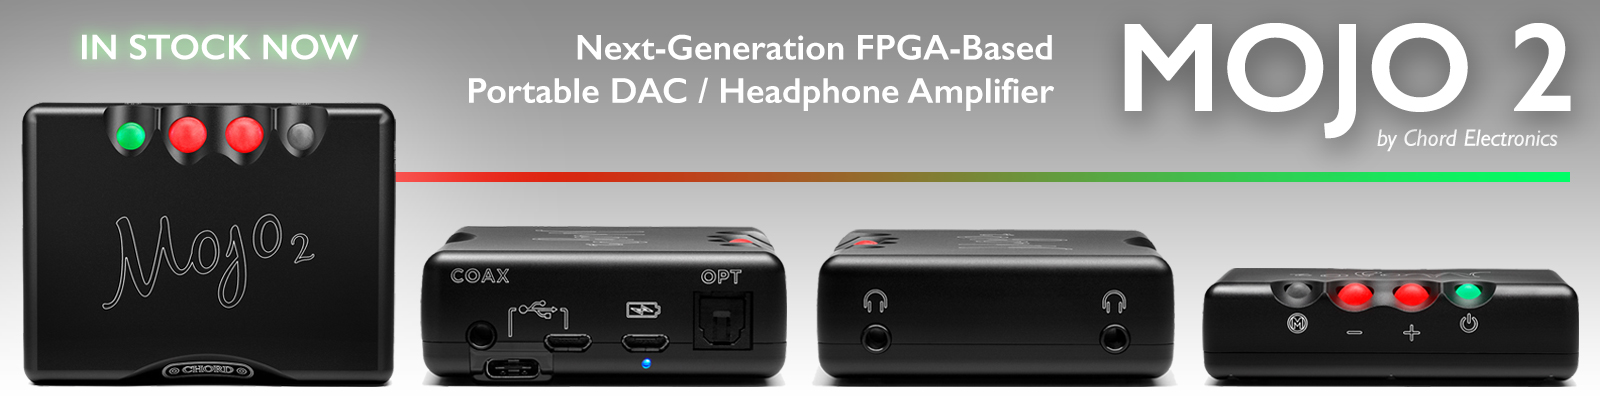 Mojo 2 Next-Generation Portable DAC / Headphone Amplifier